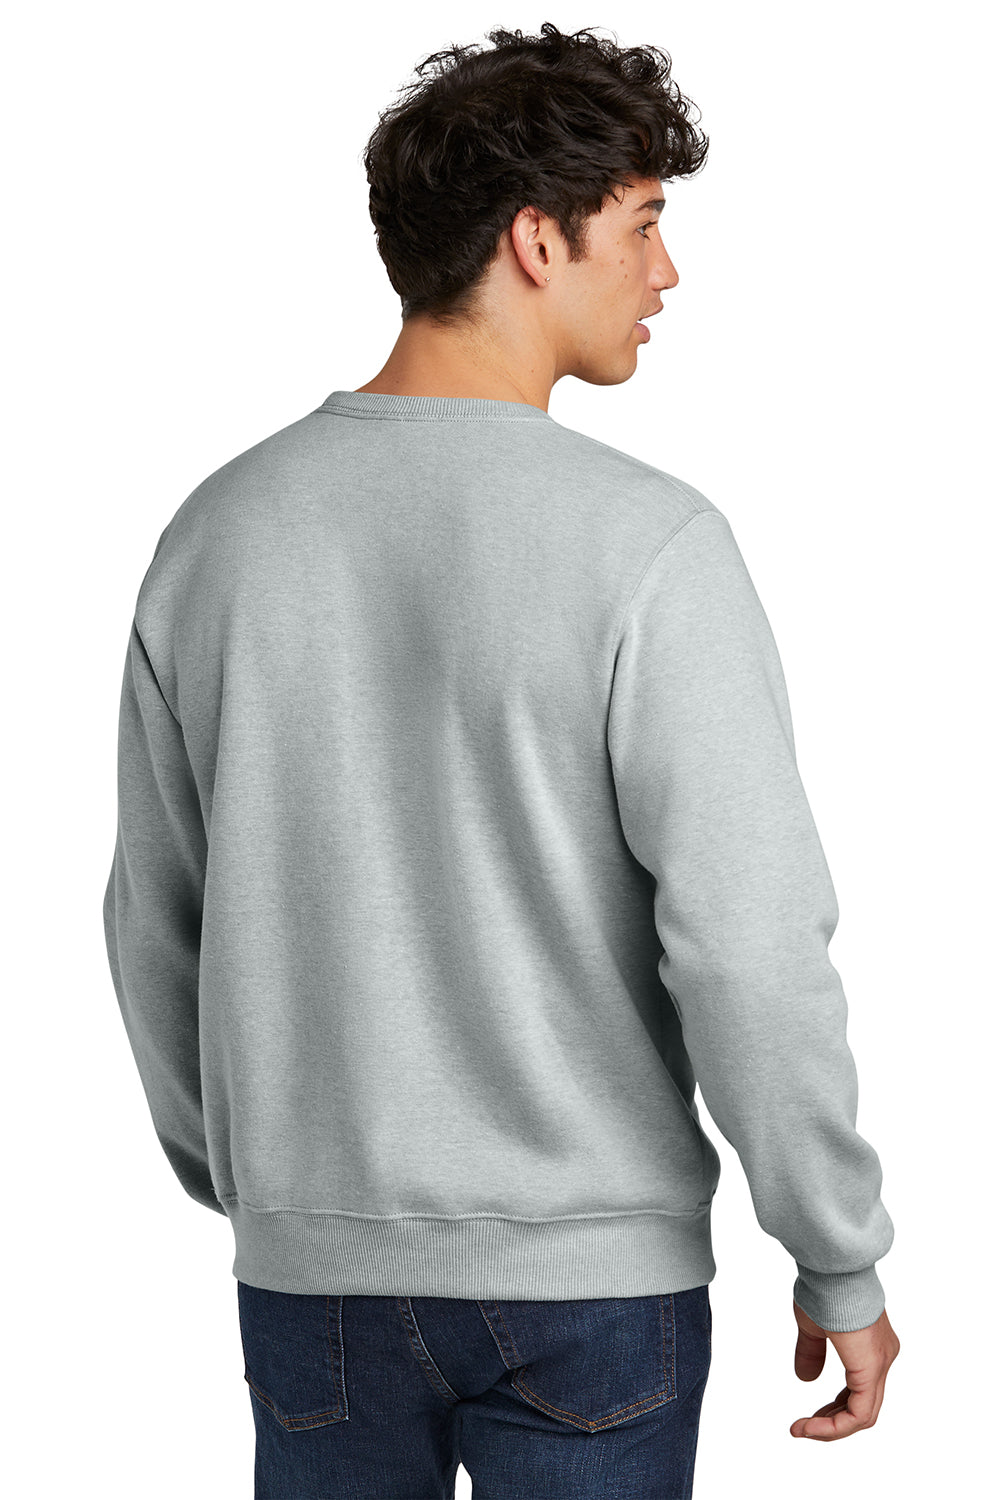 Jerzees 701M Mens Eco Premium Crewneck Sweatshirt Heather Frost Grey Back